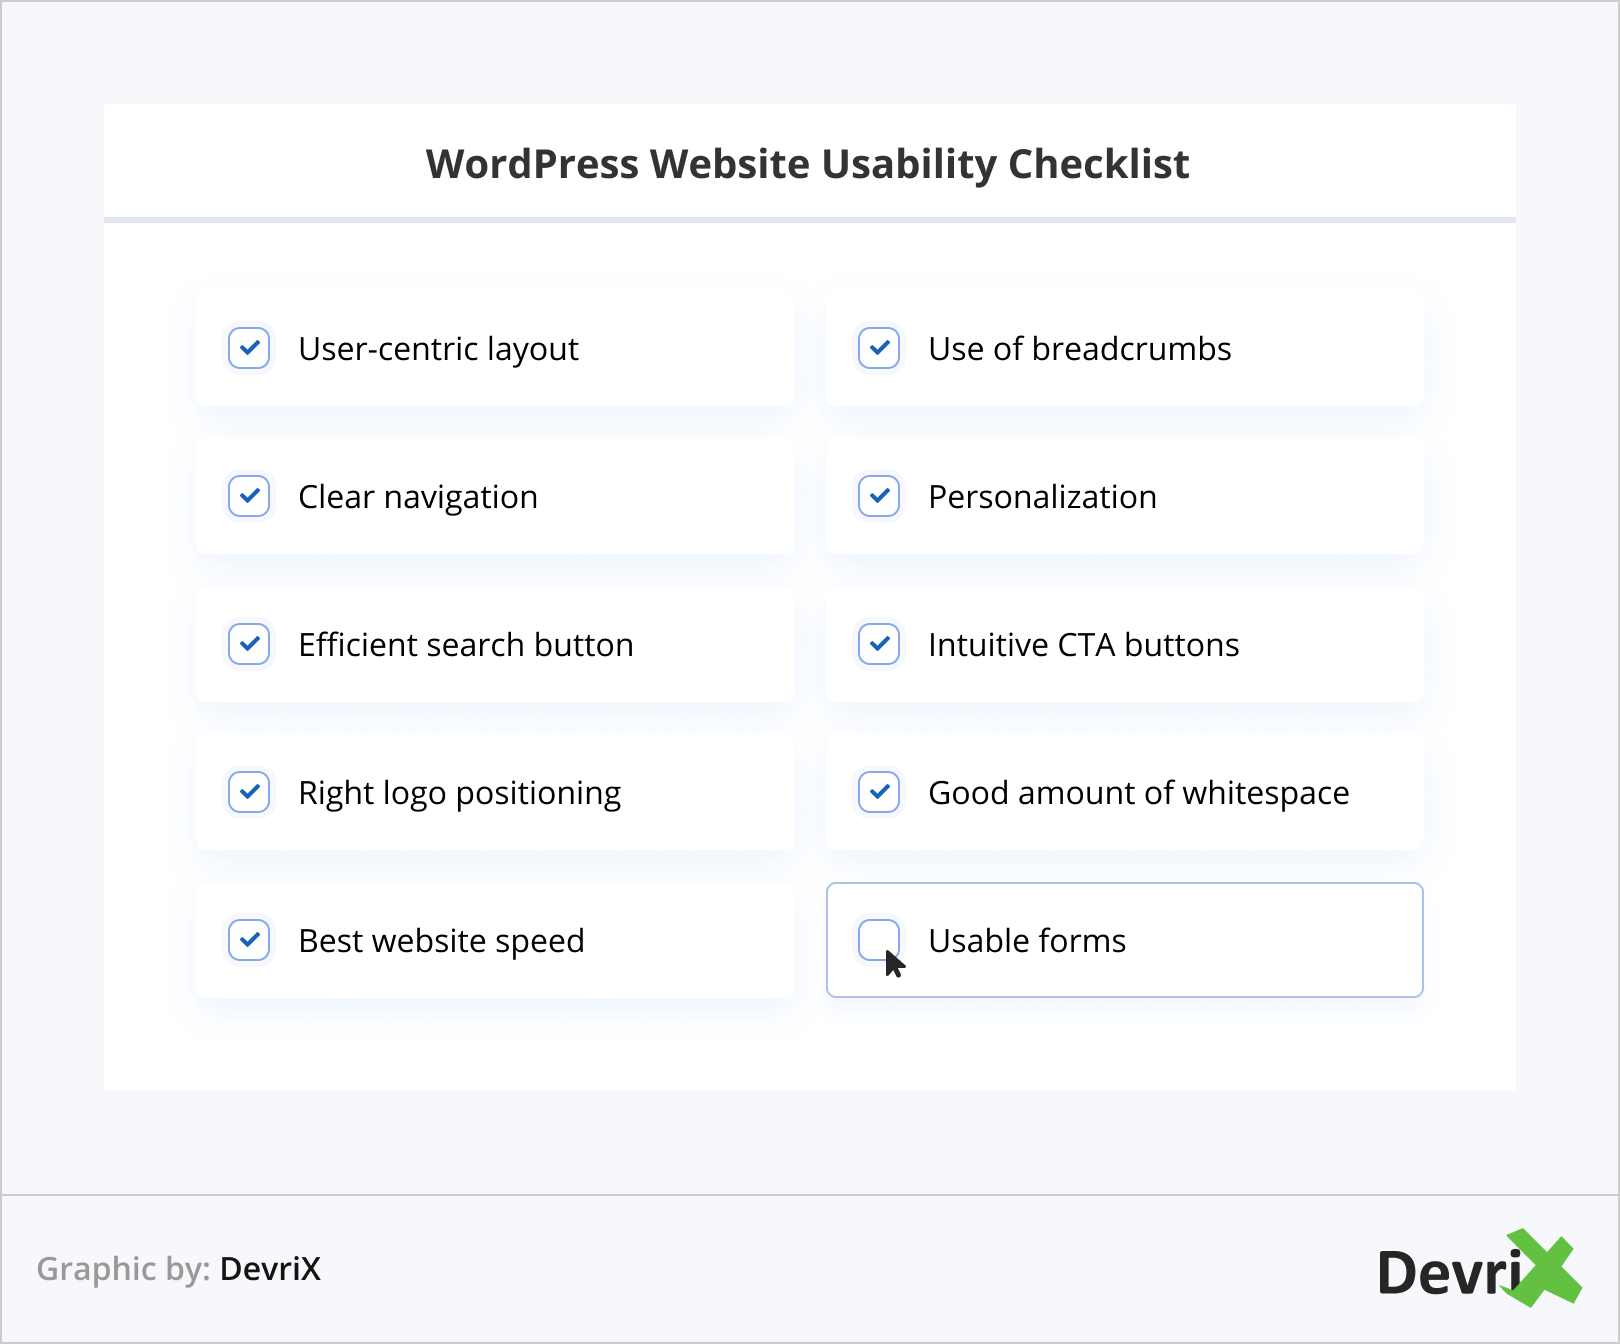 WordPress Website Usability Checklist